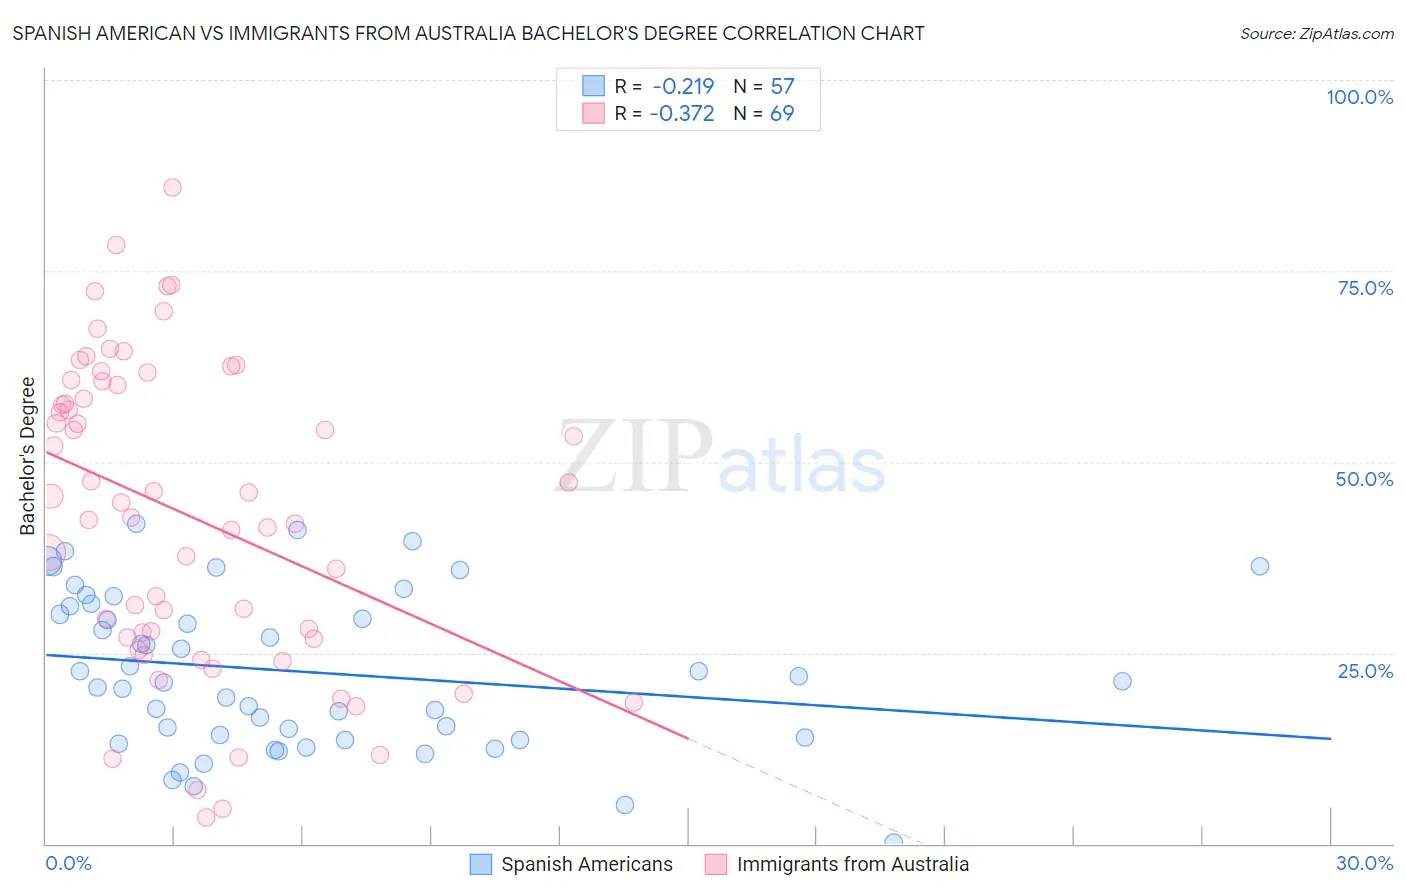 Spanish American vs Immigrants from Australia Bachelor's Degree